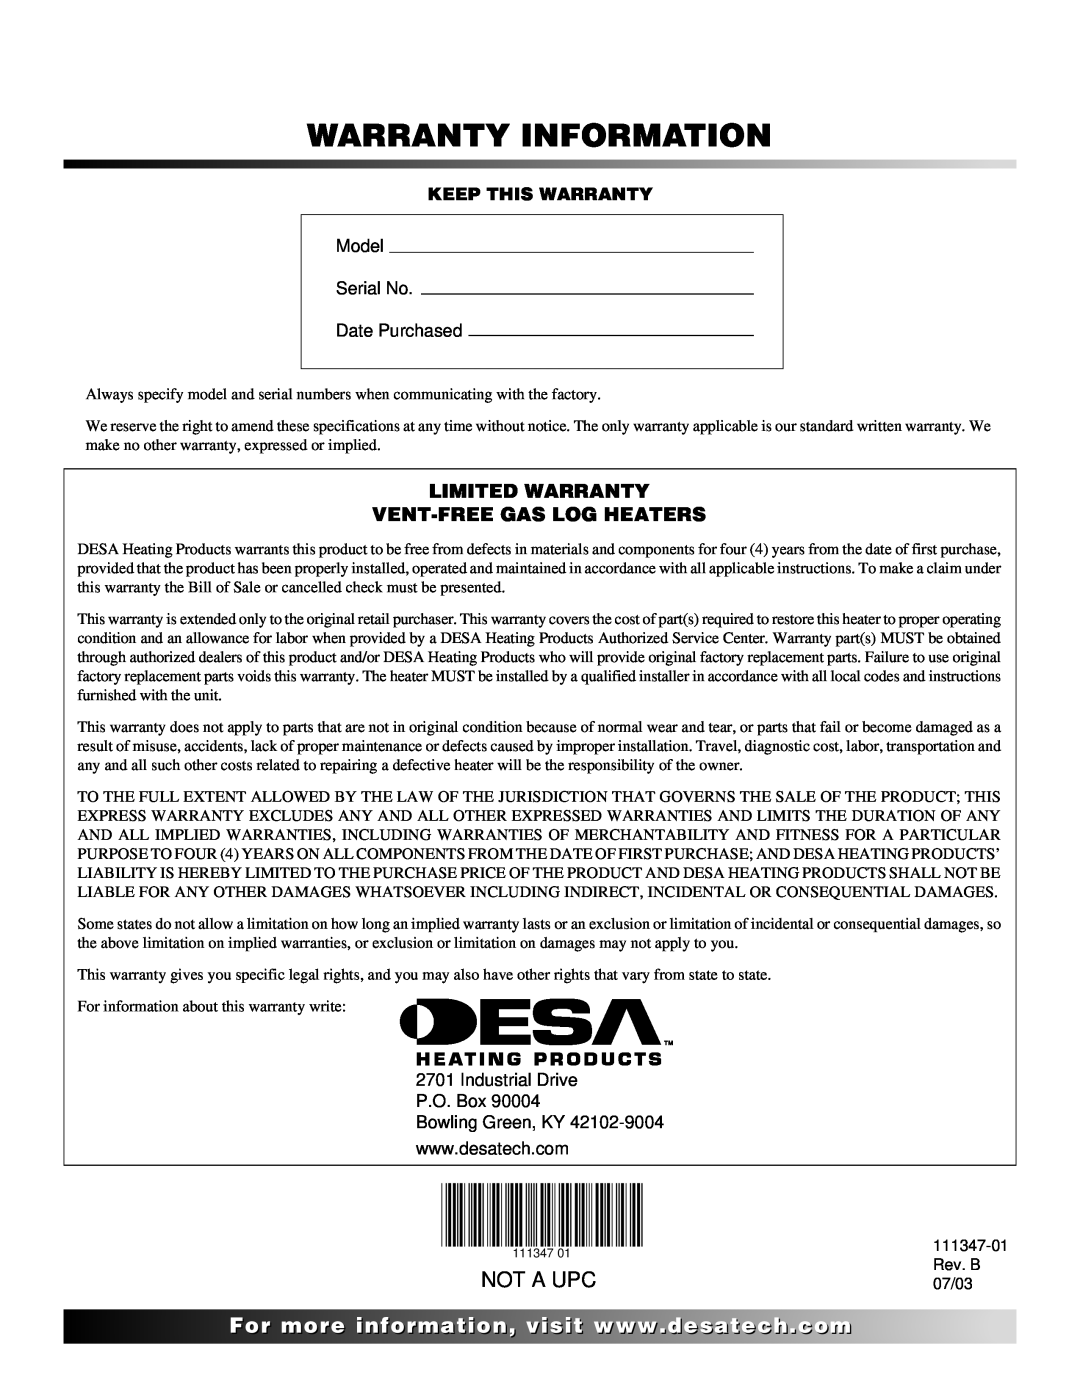 Desa LSL3124N Warranty Information, Not A Upc, Limited Warranty Vent-Freegas Log Heaters, Model Serial No Date Purchased 